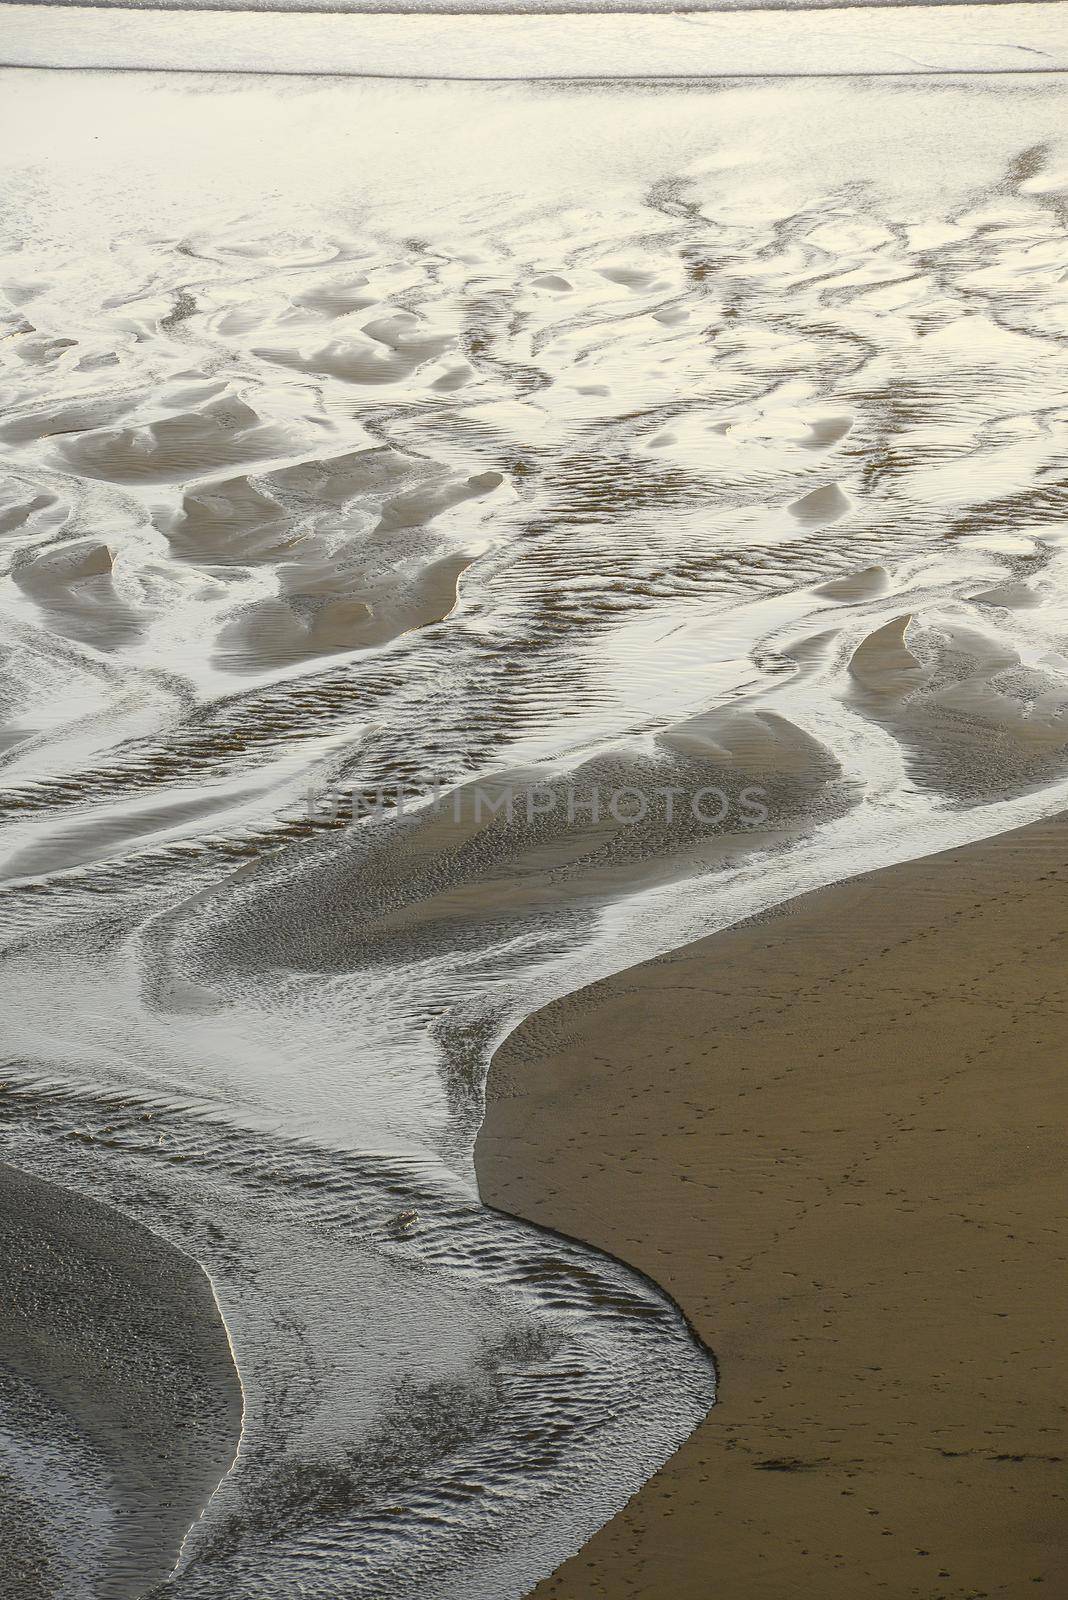 water pattern on sand by porbital